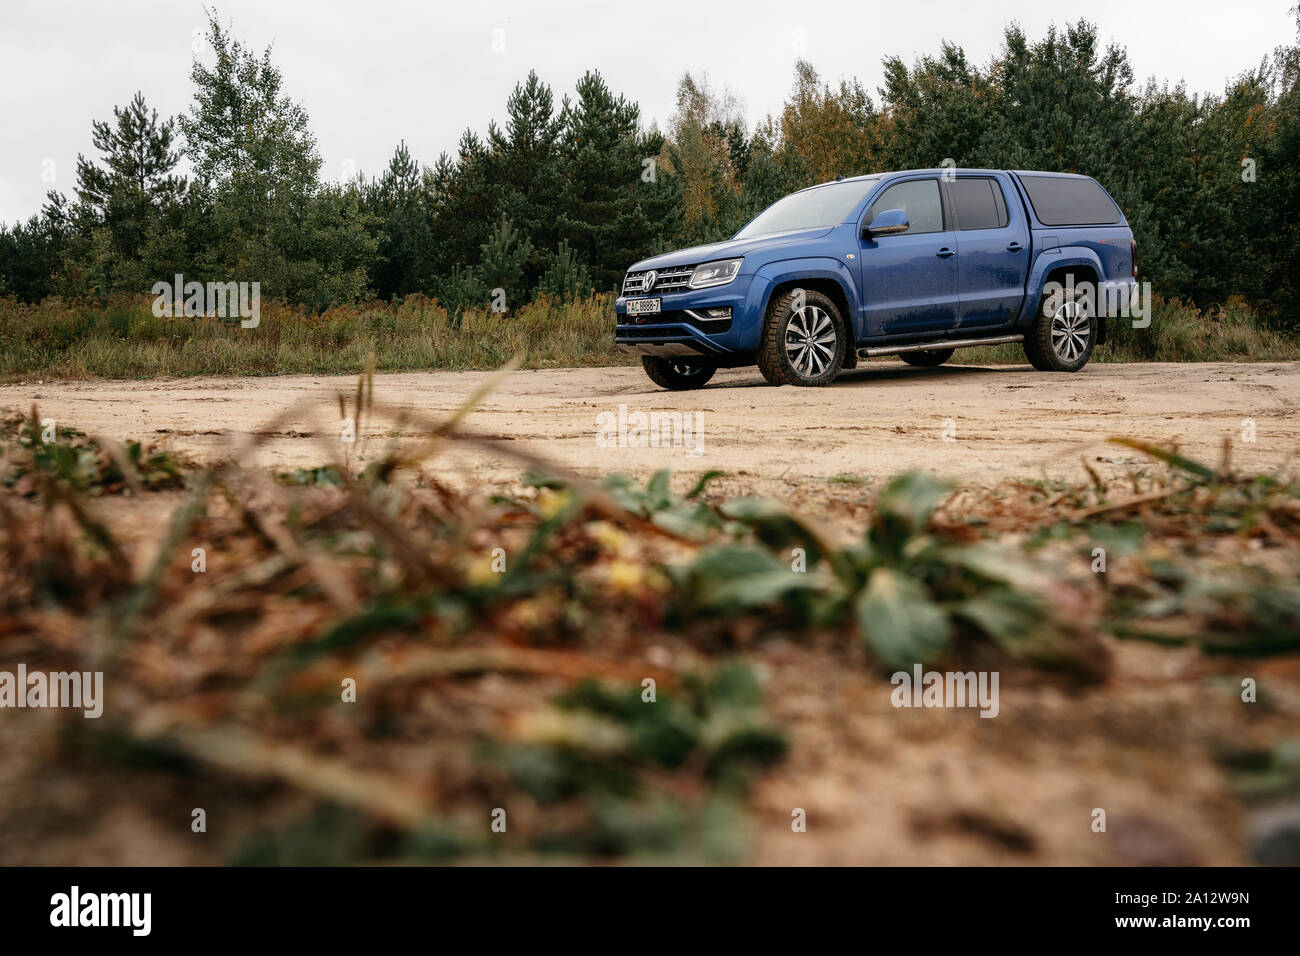 Minsk, Belarus - September 20, 2019: Volkswagen Amarok 4x4 pickup truck on country road at woodland. Stock Photo